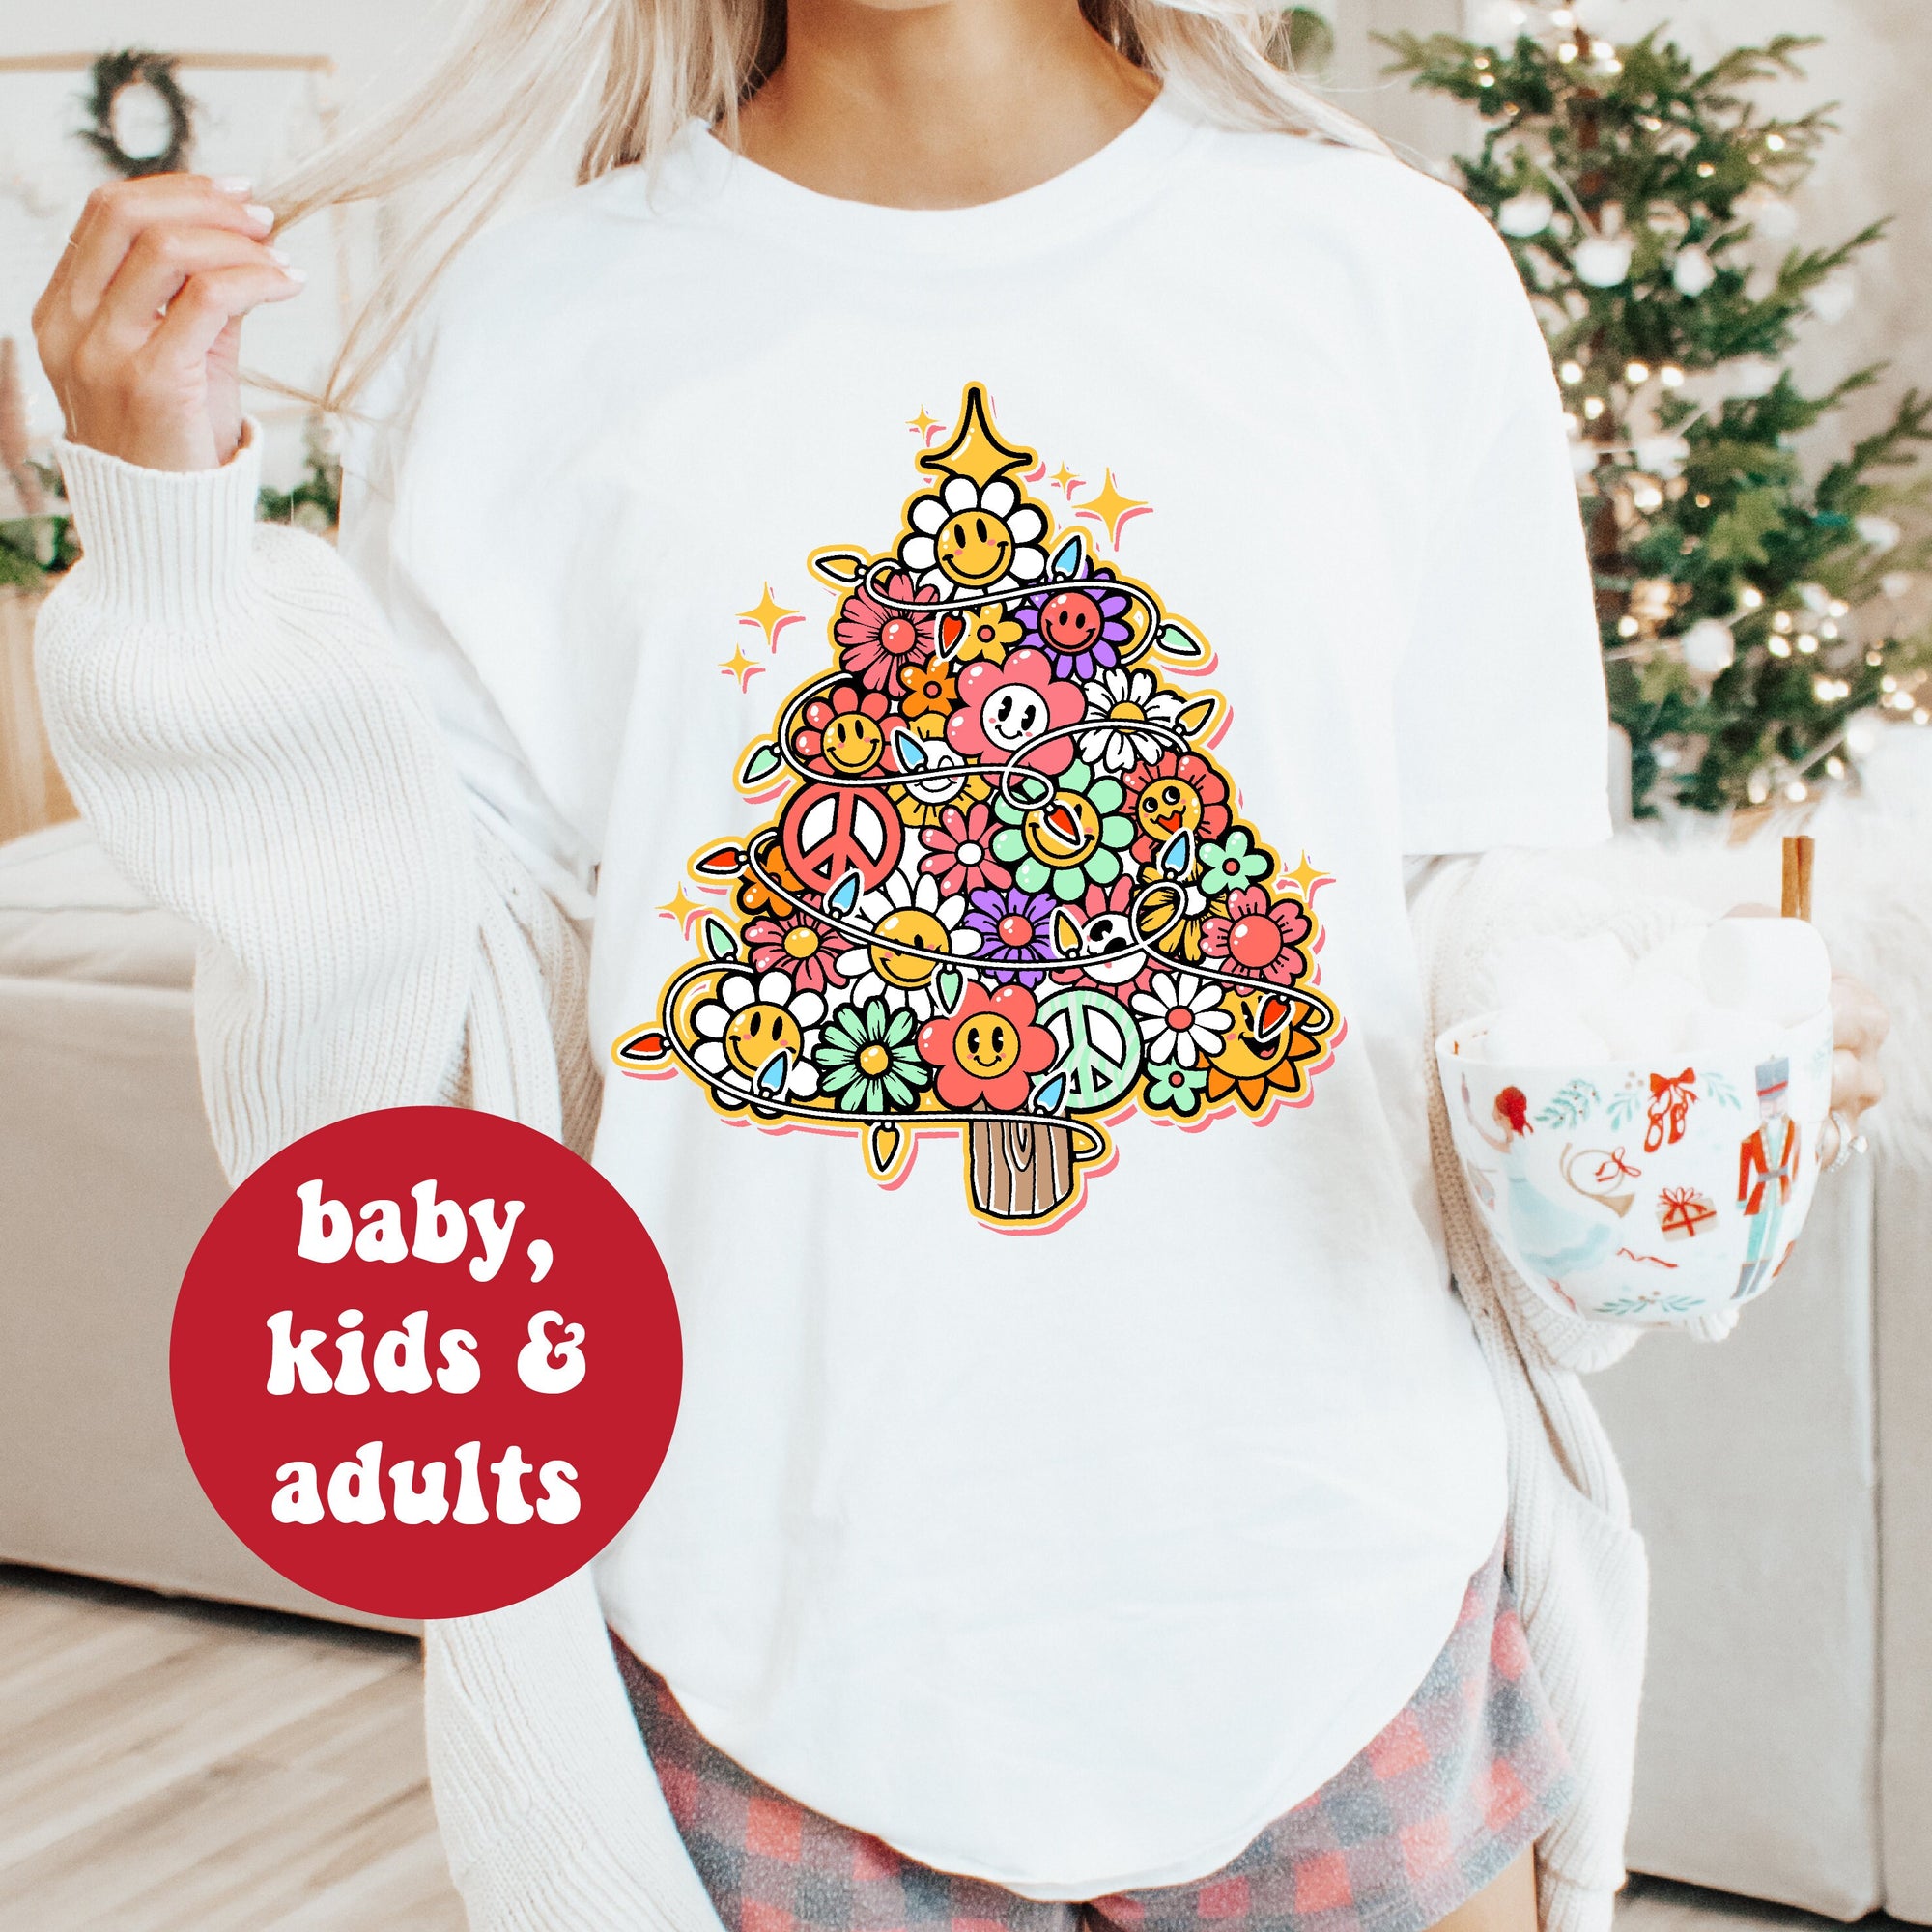 Christmas Tree T-Shirt, Hippy Christmas T-Shirt, Hippie Christmas T-Shirts, Matching Family T-Shirts, Matching Christmas Family, Retro Theme